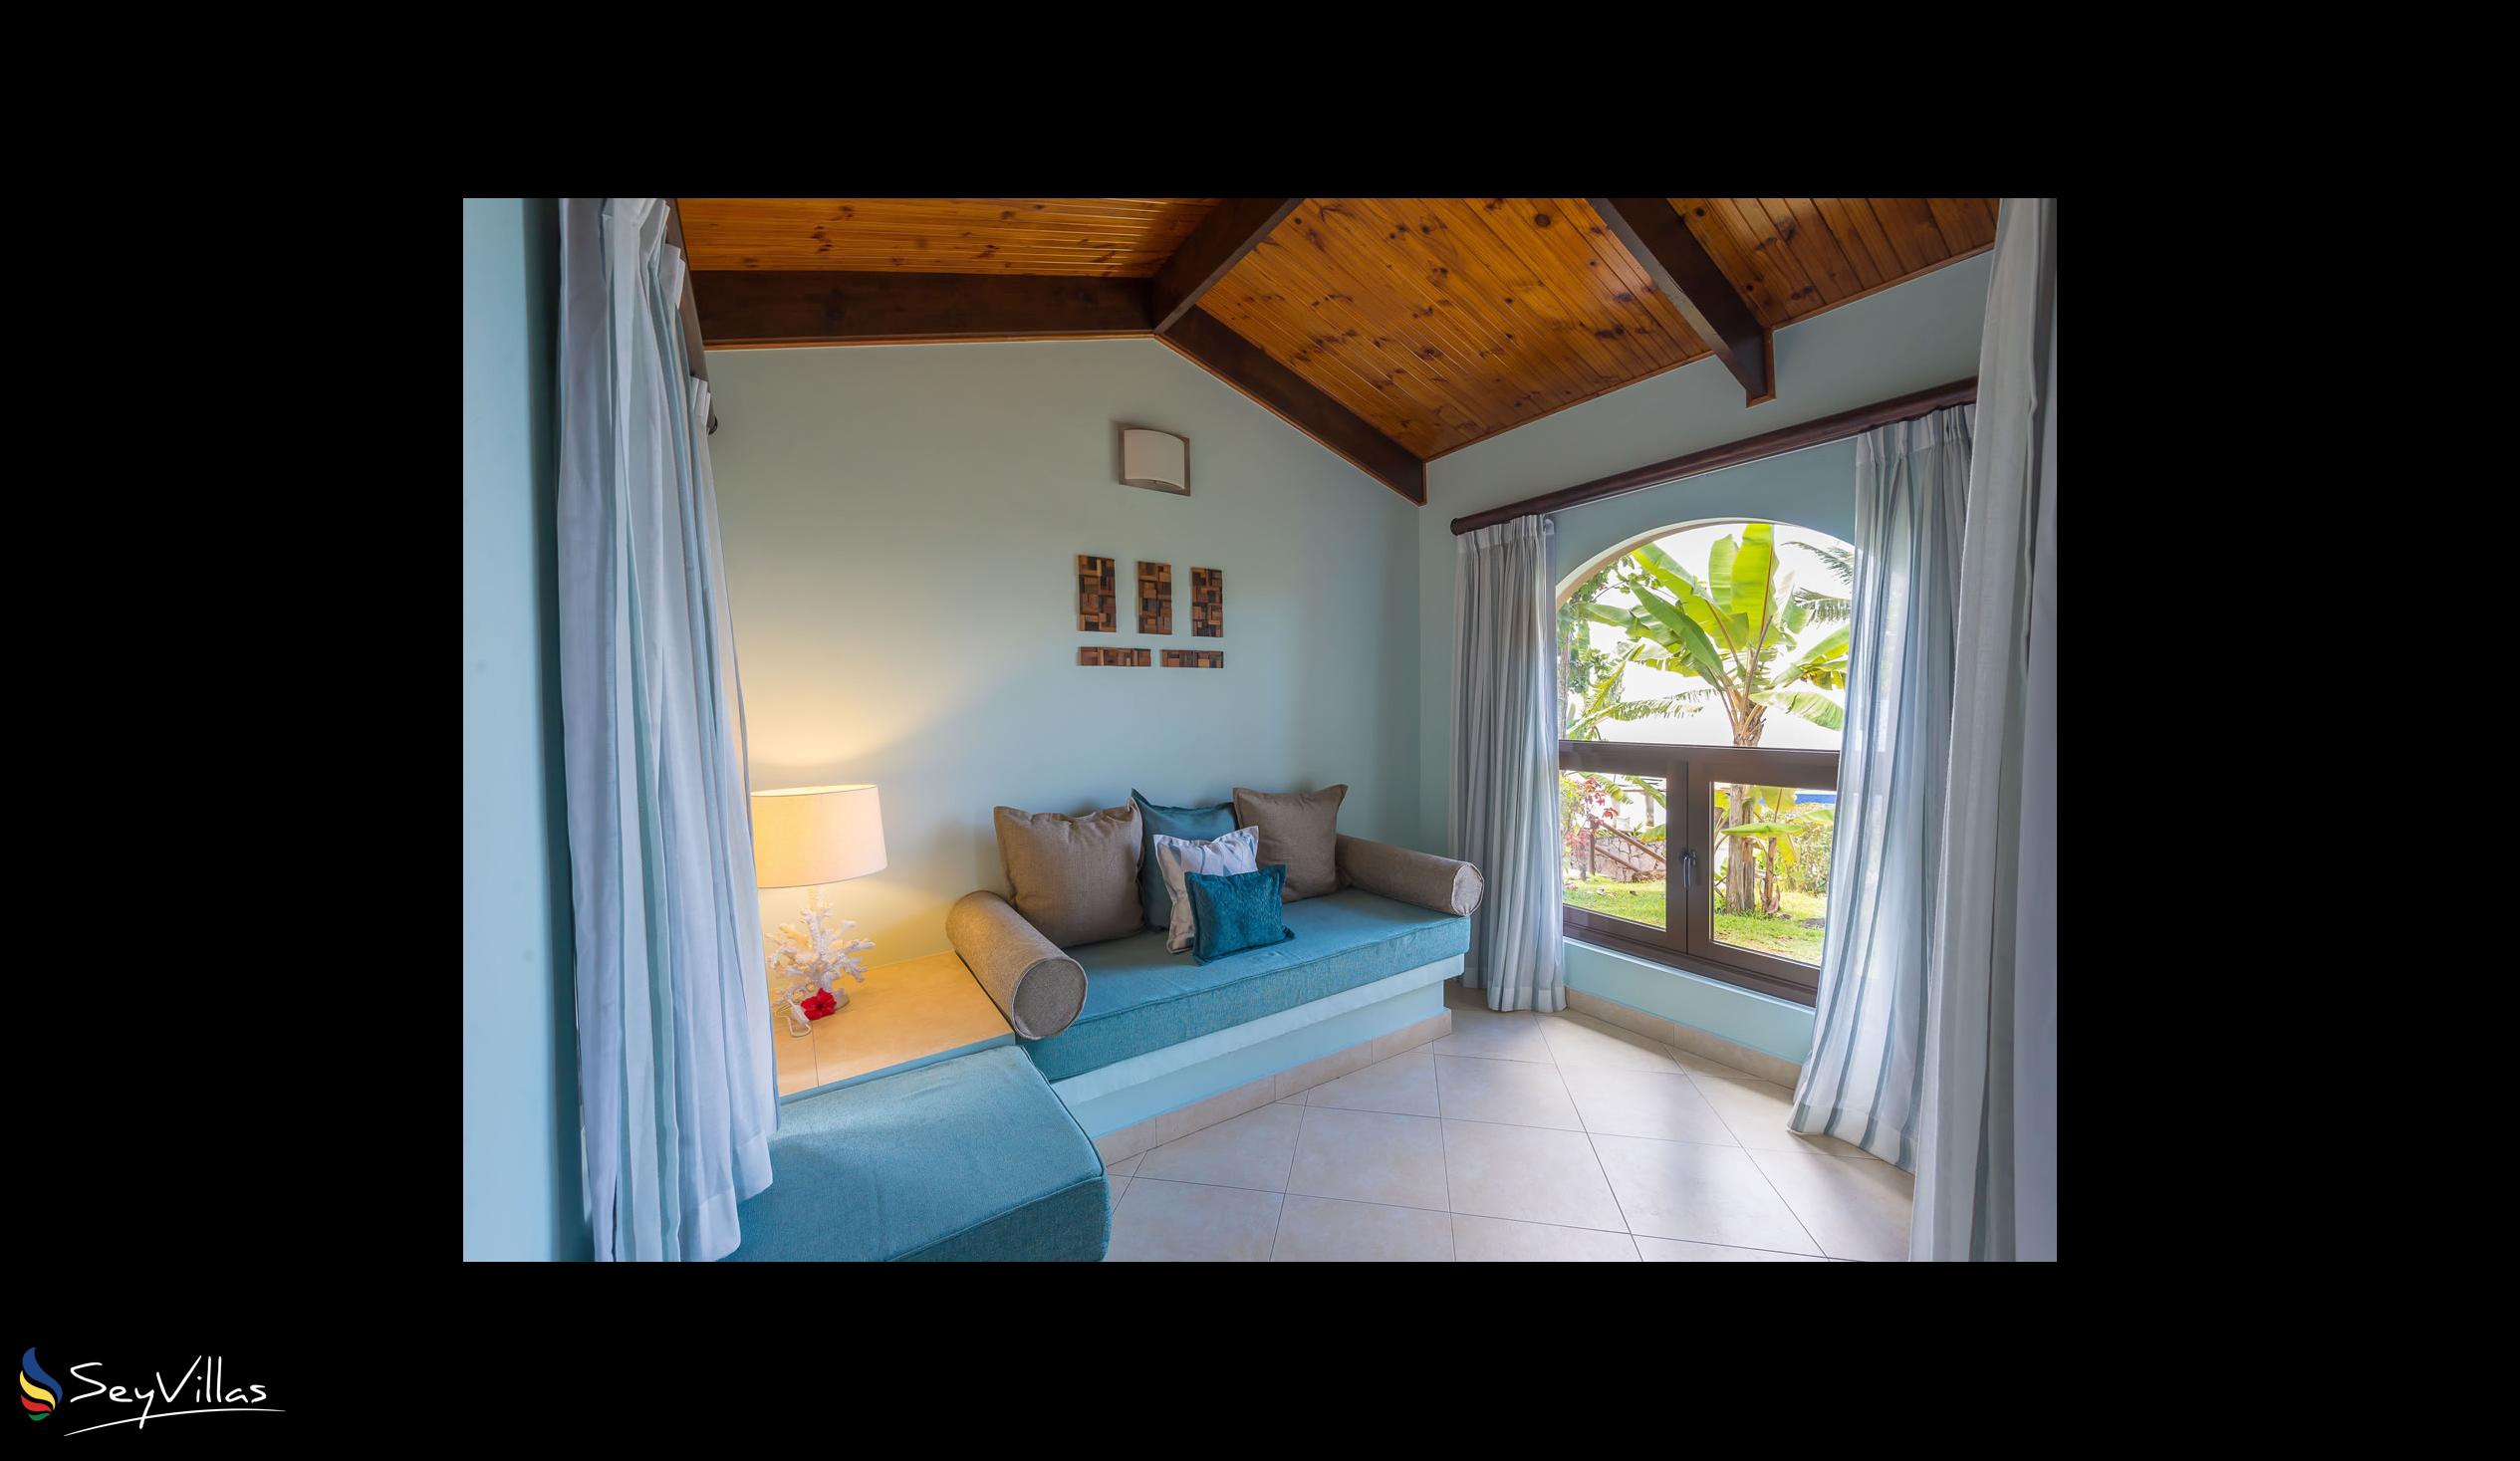 Foto 52: Coco de Mer & Black Parrot Suites - Standard - Praslin (Seychelles)